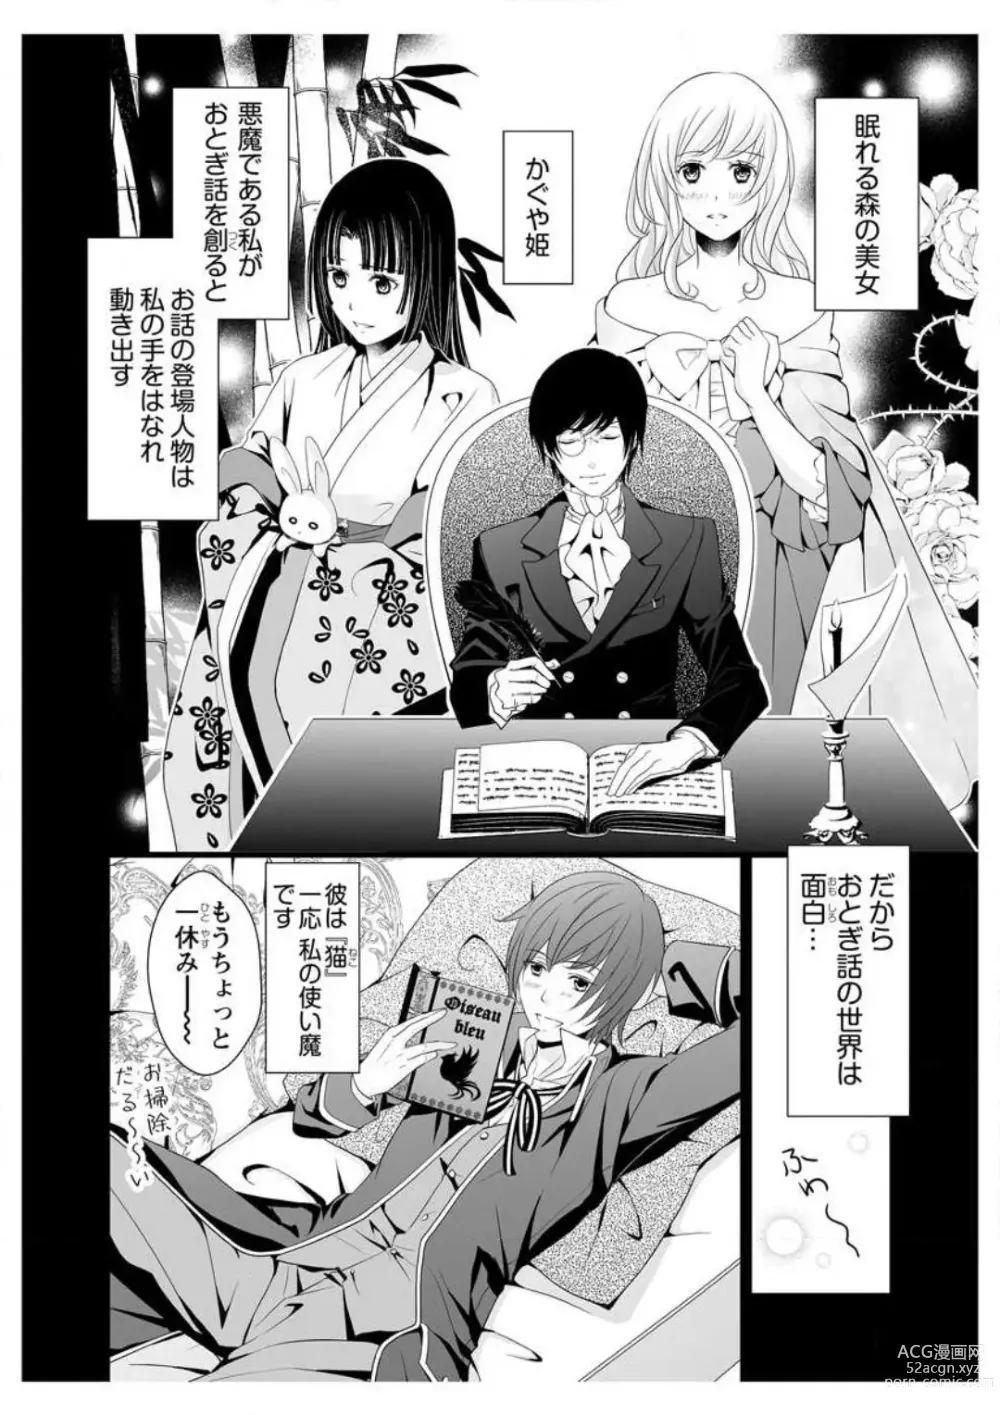 Page 2 of manga Ero ◆ Meruhen Aoi Tori 1-10